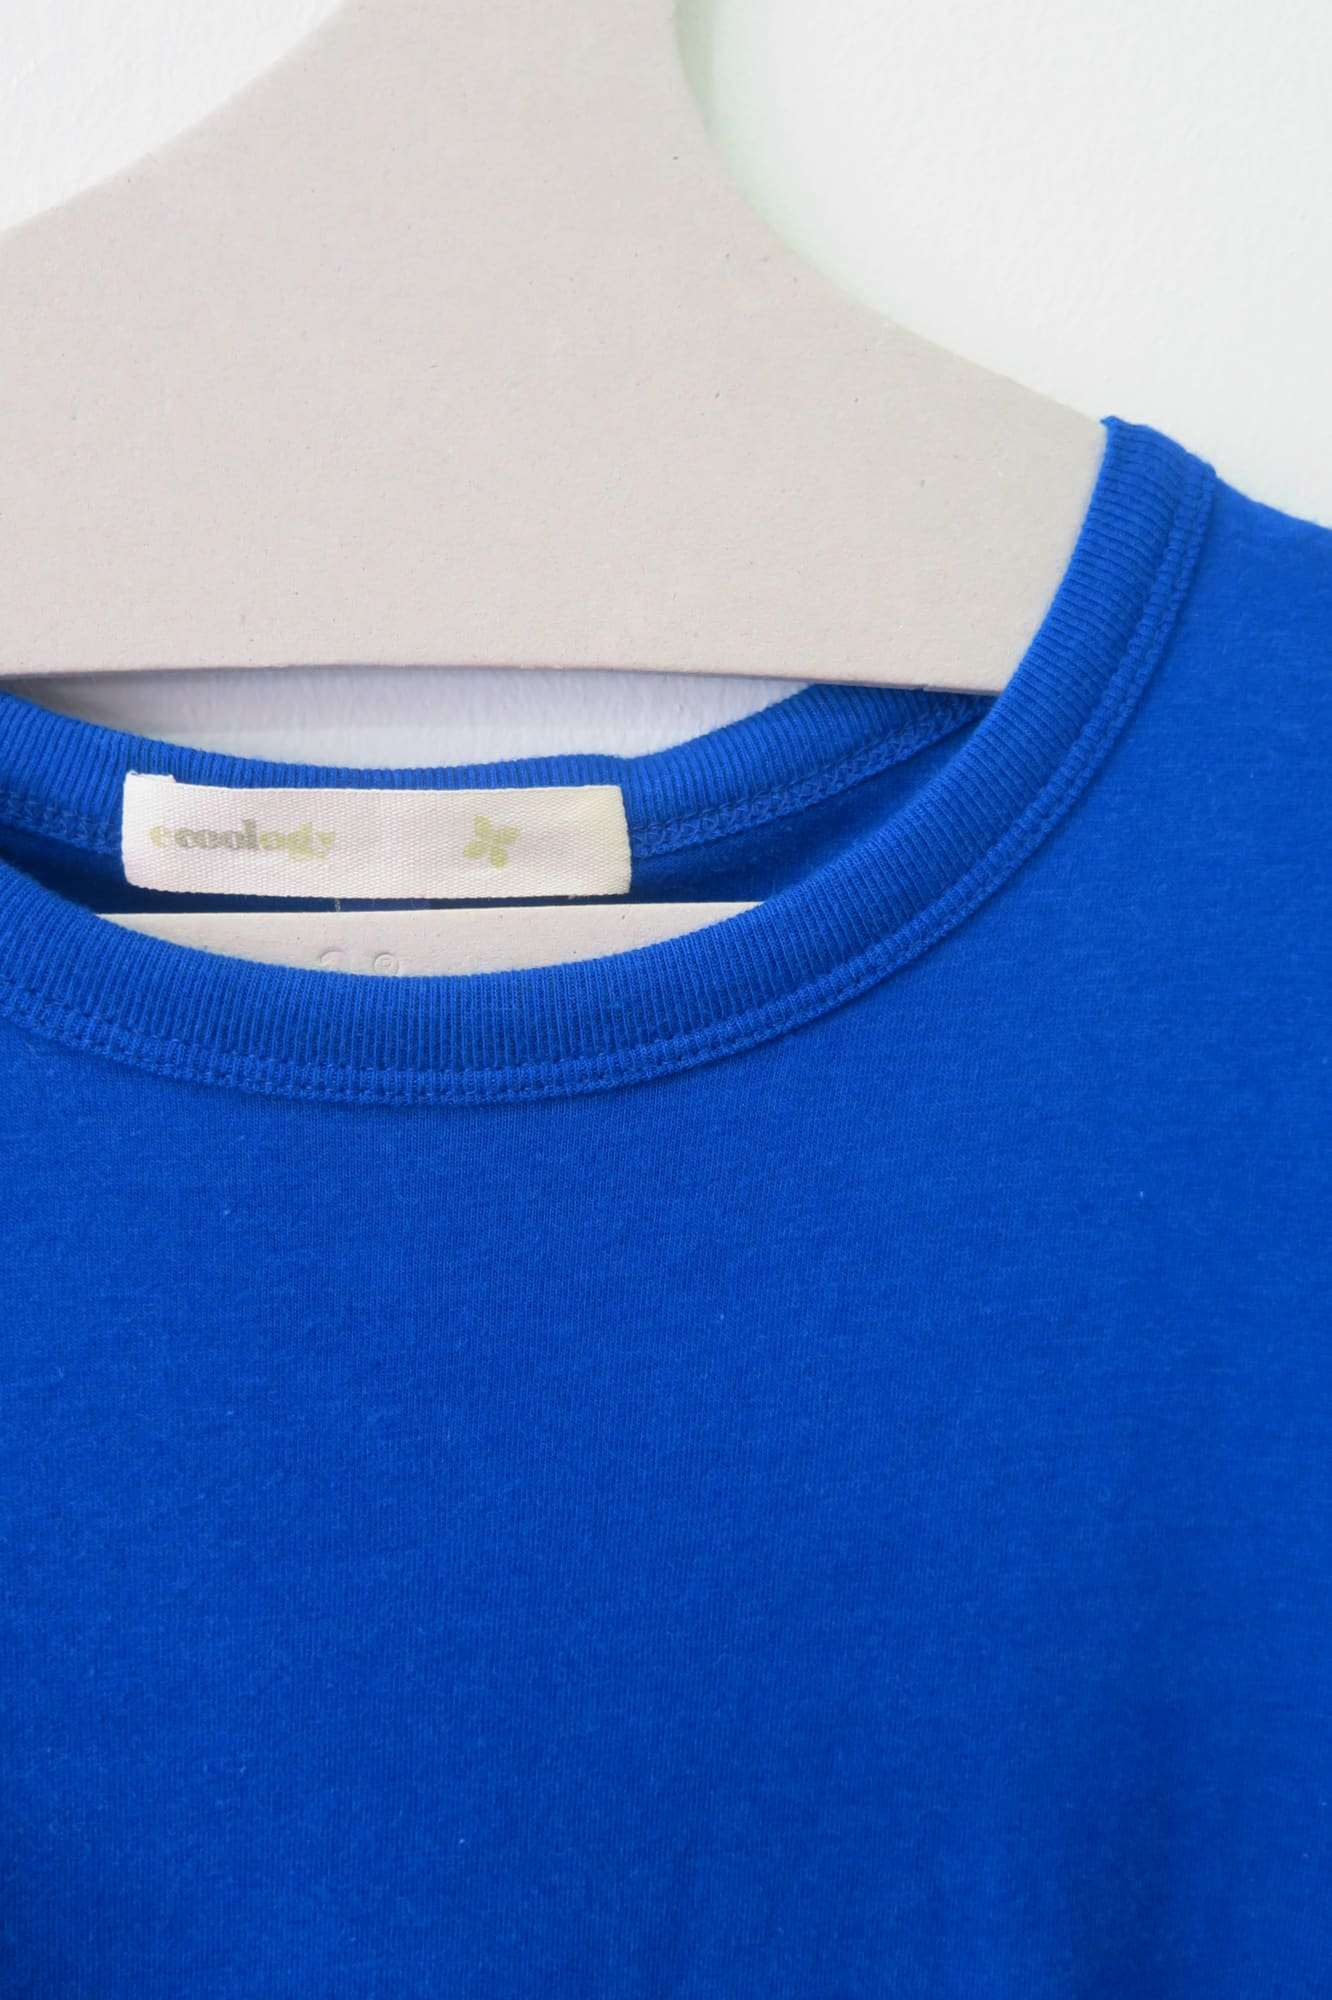 Camiseta azul klein de algodón orgánico y bambú